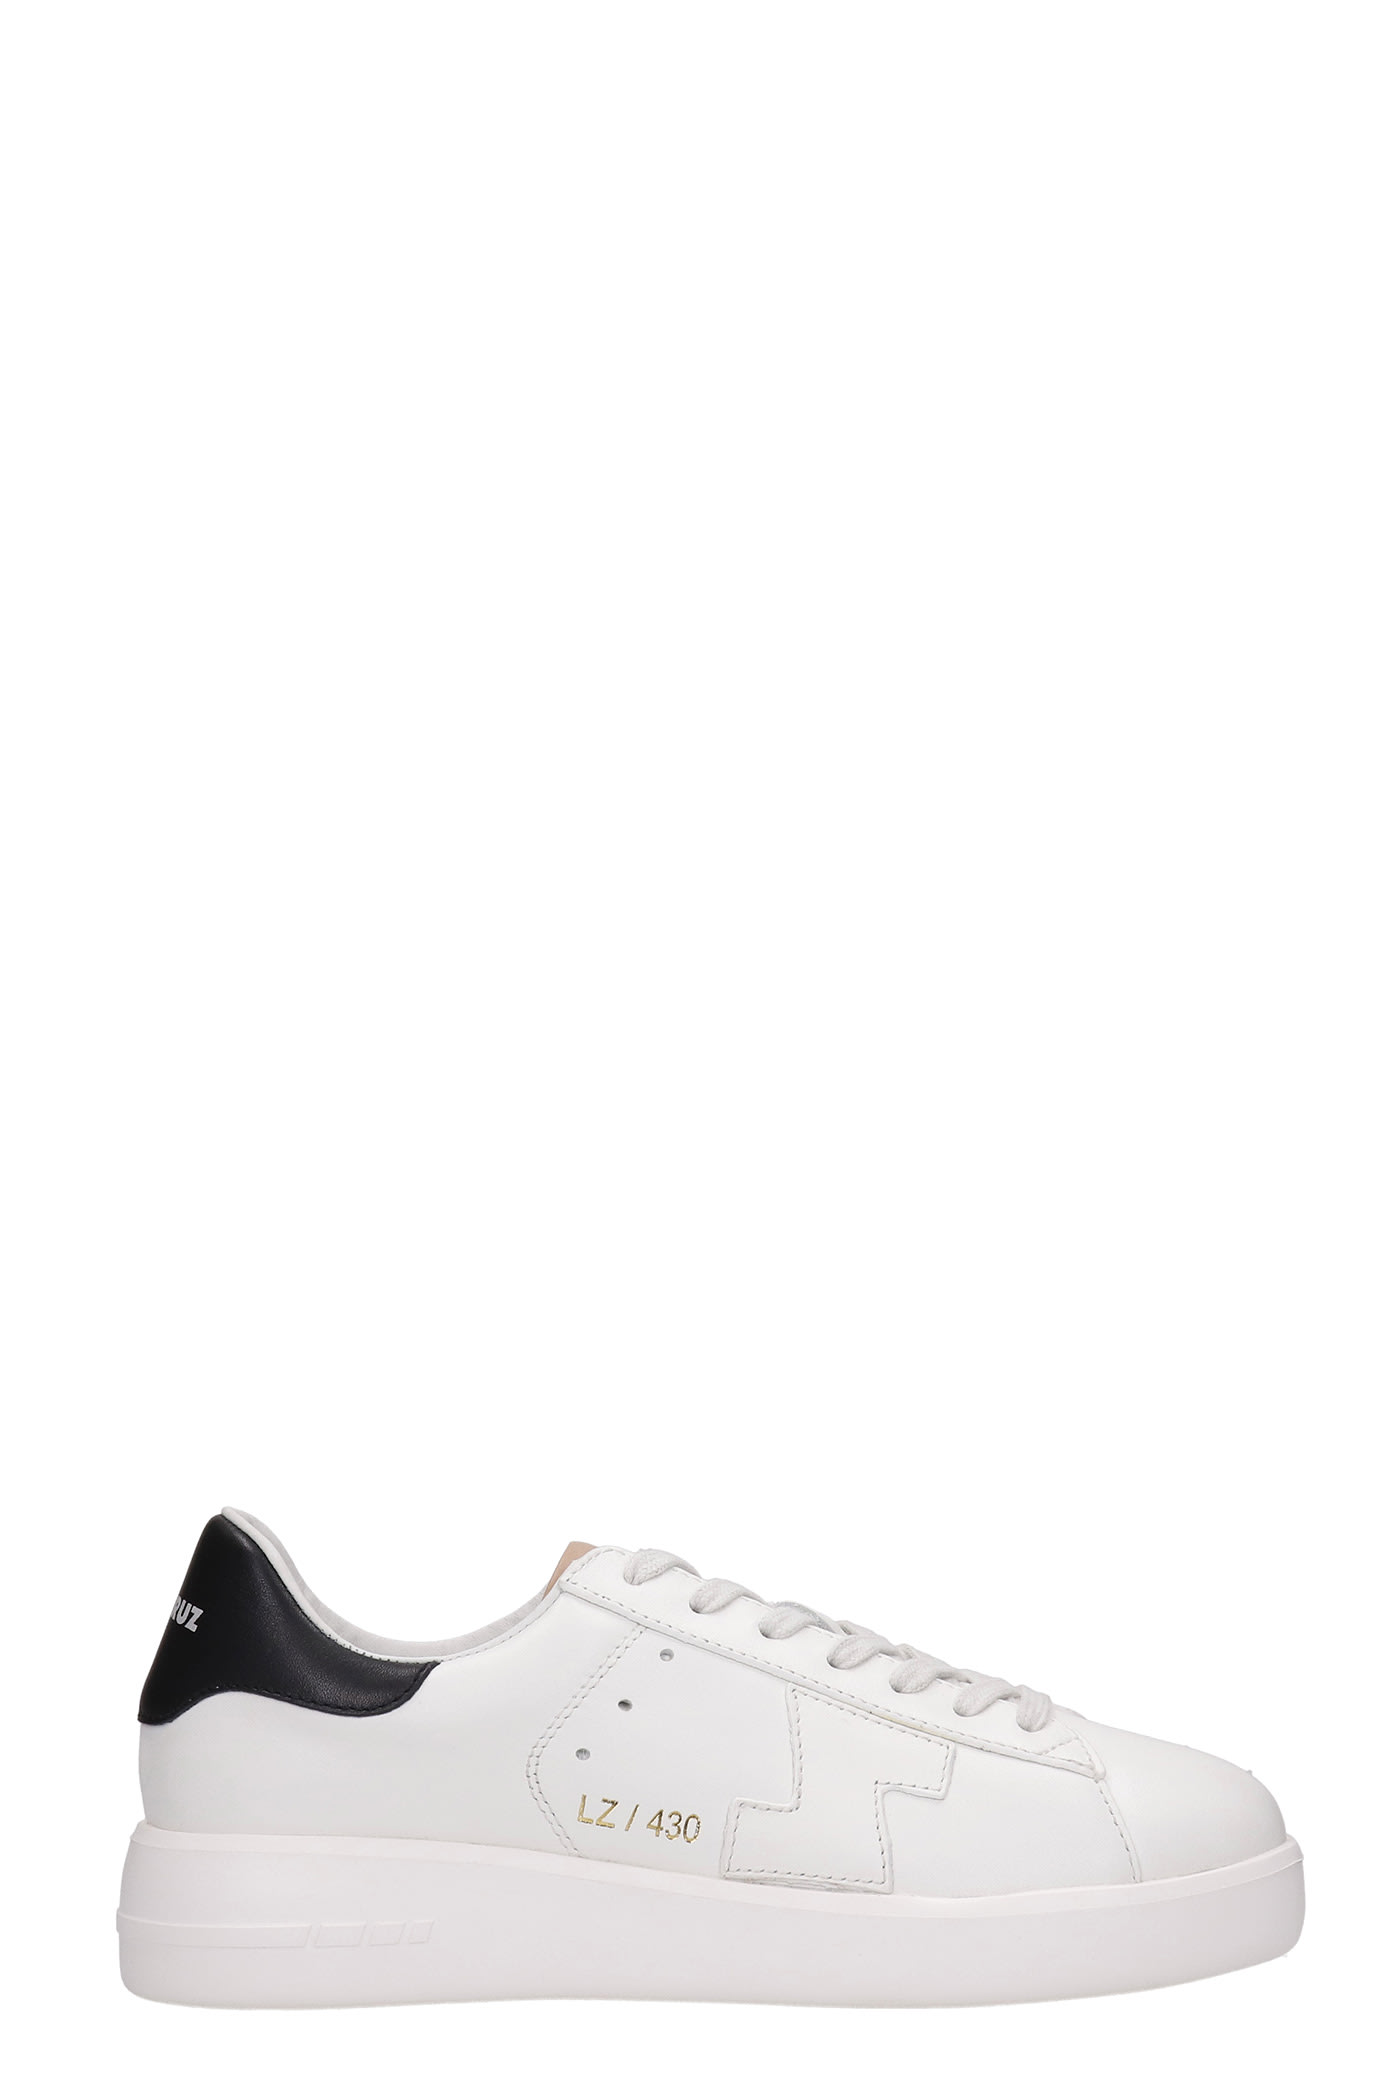 lola cruz sneakers in white leather